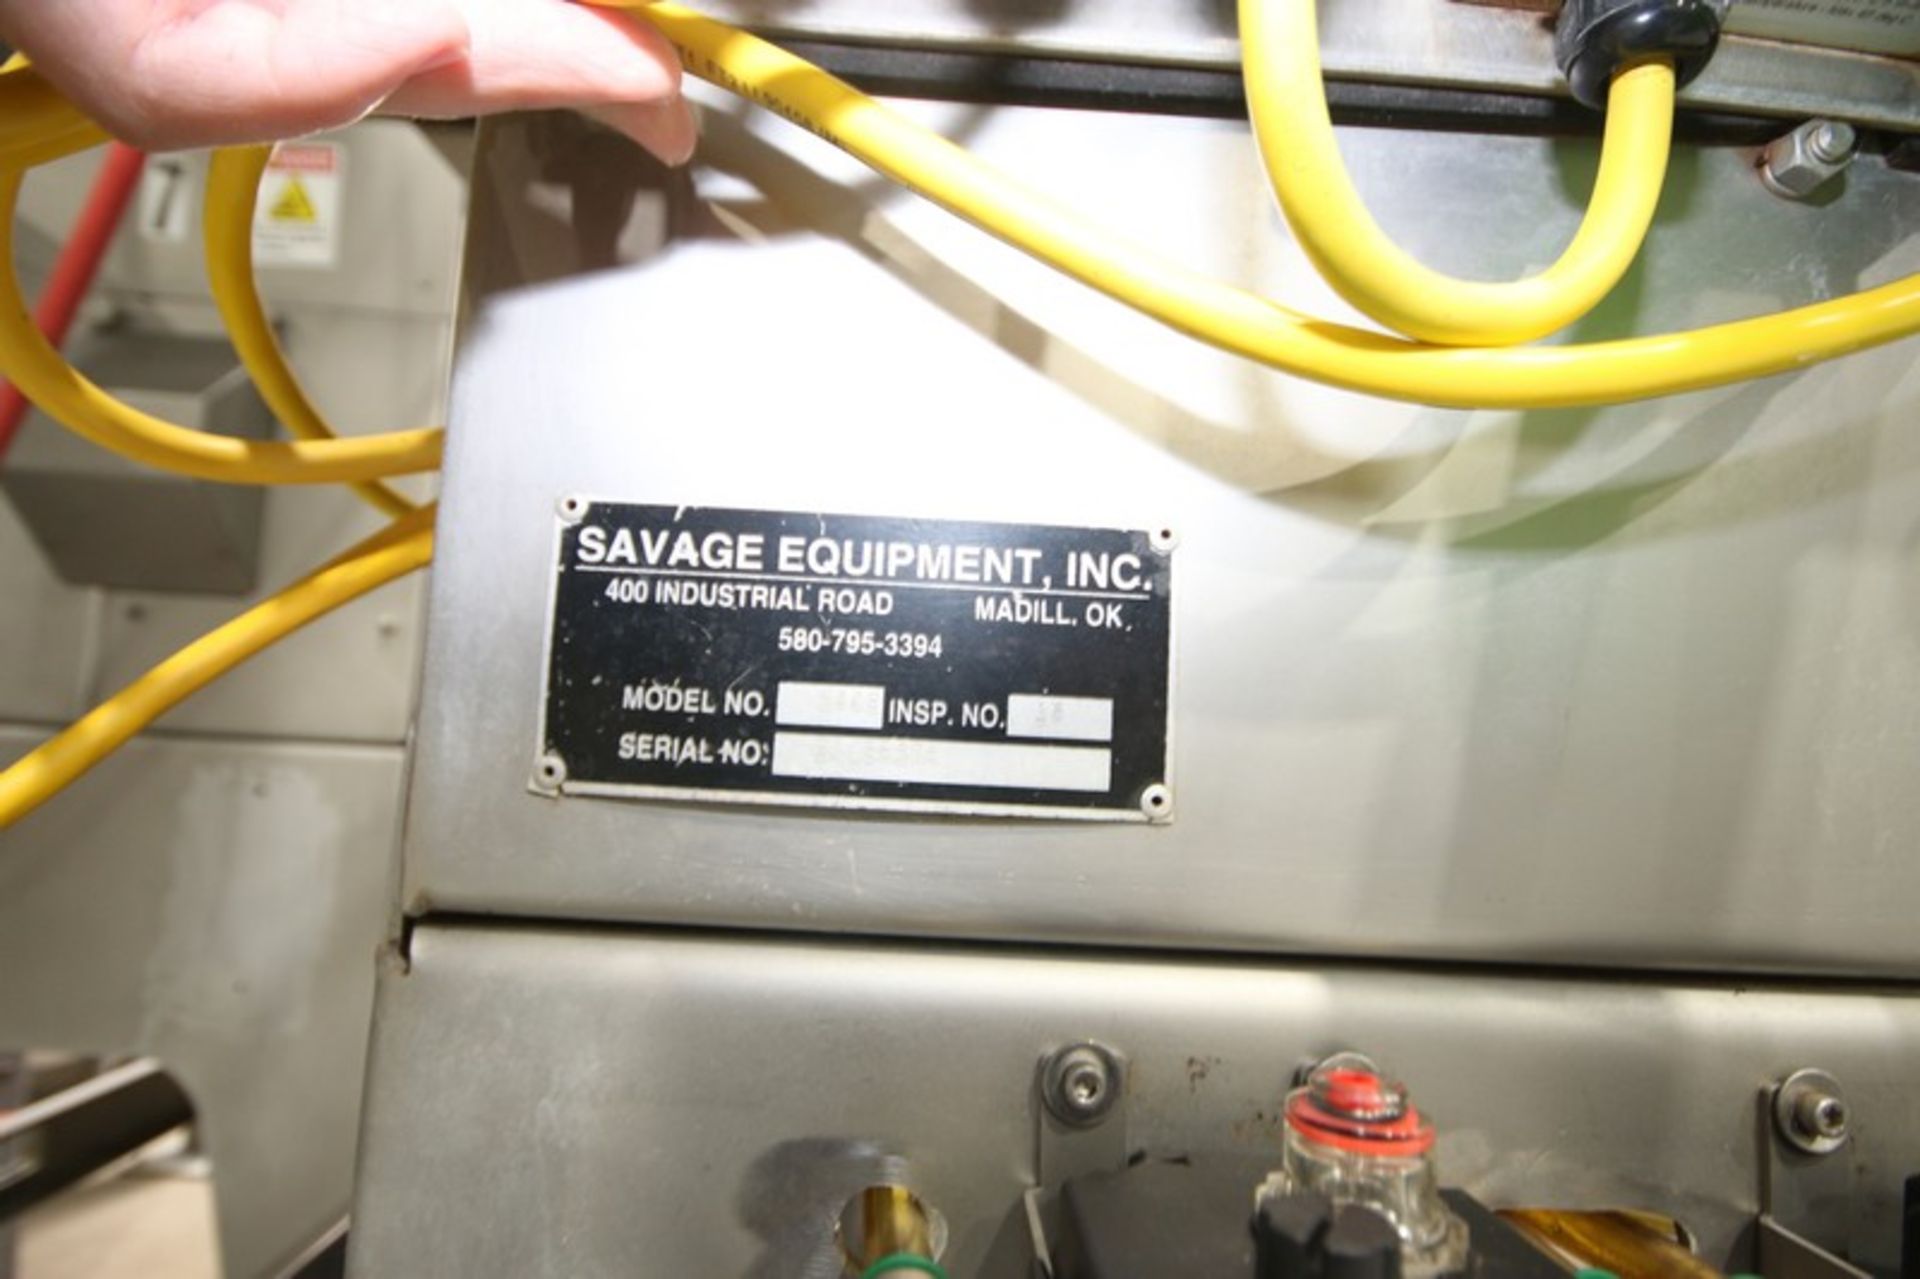 Savage S/S Cracker, M/N 2445, S/N 244S6278, INSP No. 18, with 00043 hrs., with Lenze SMVector VFD, - Image 3 of 6